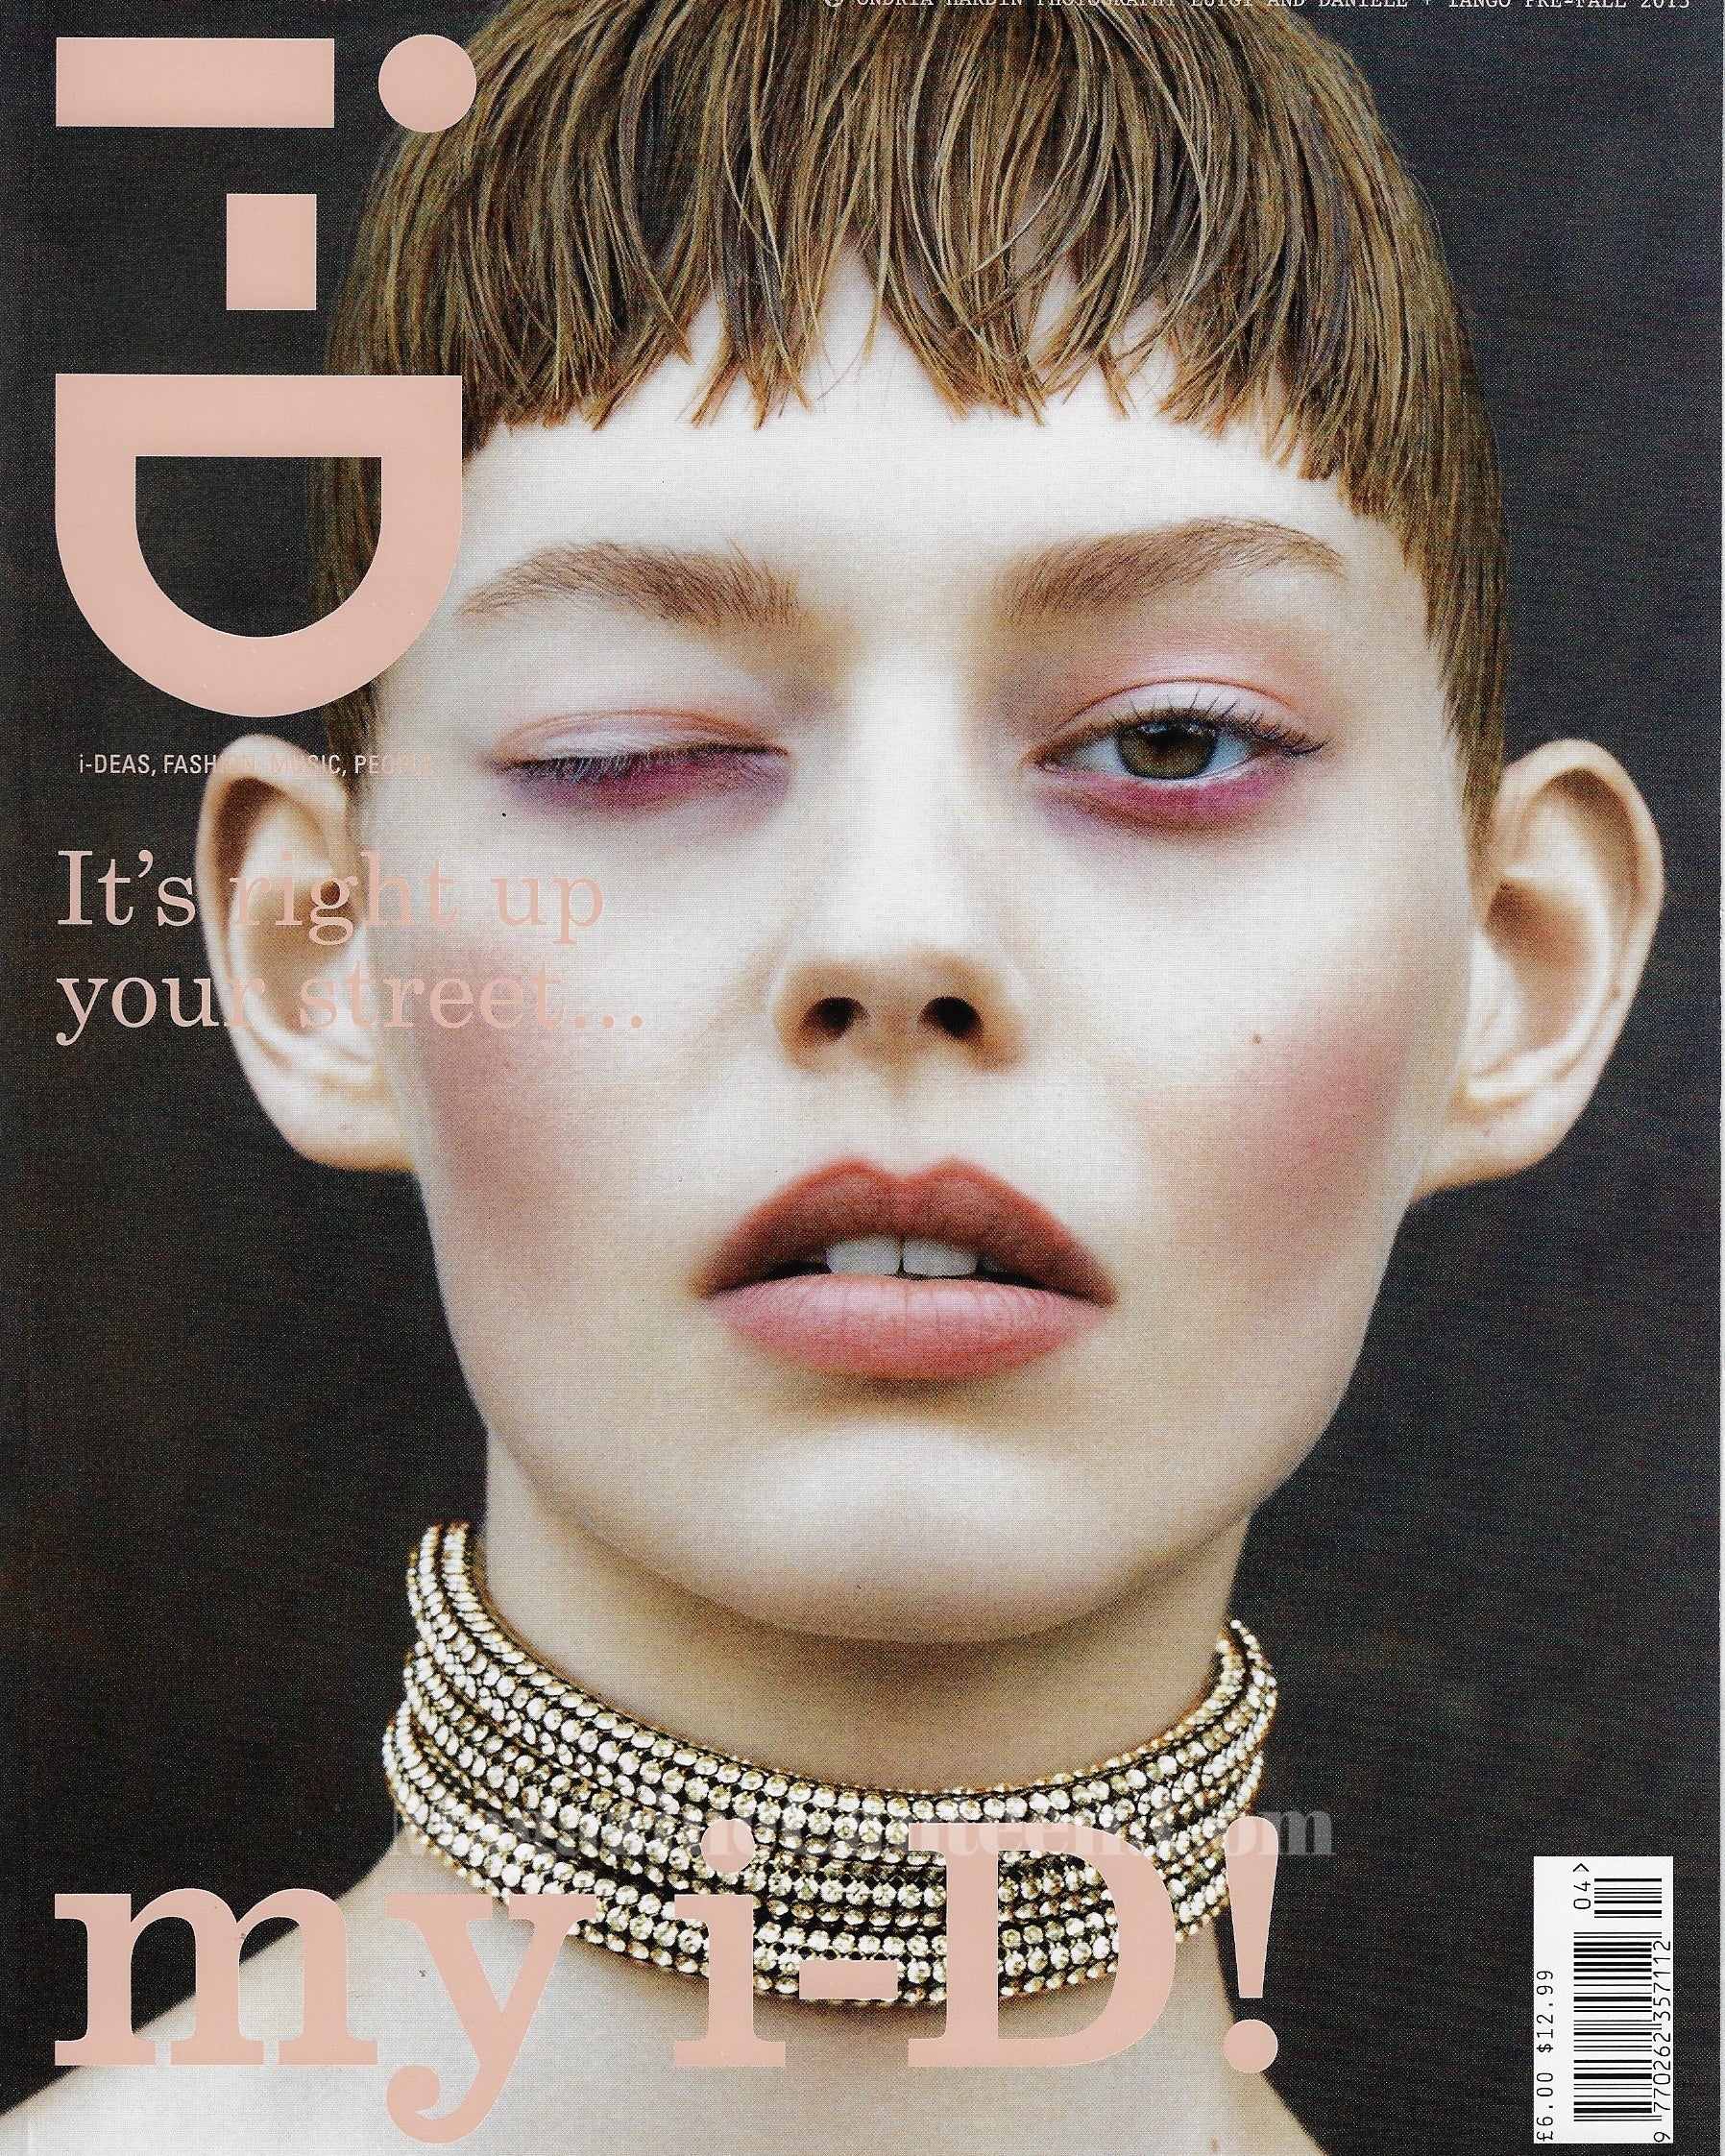 I-D Magazine 326 - Ondria Hardin 2013